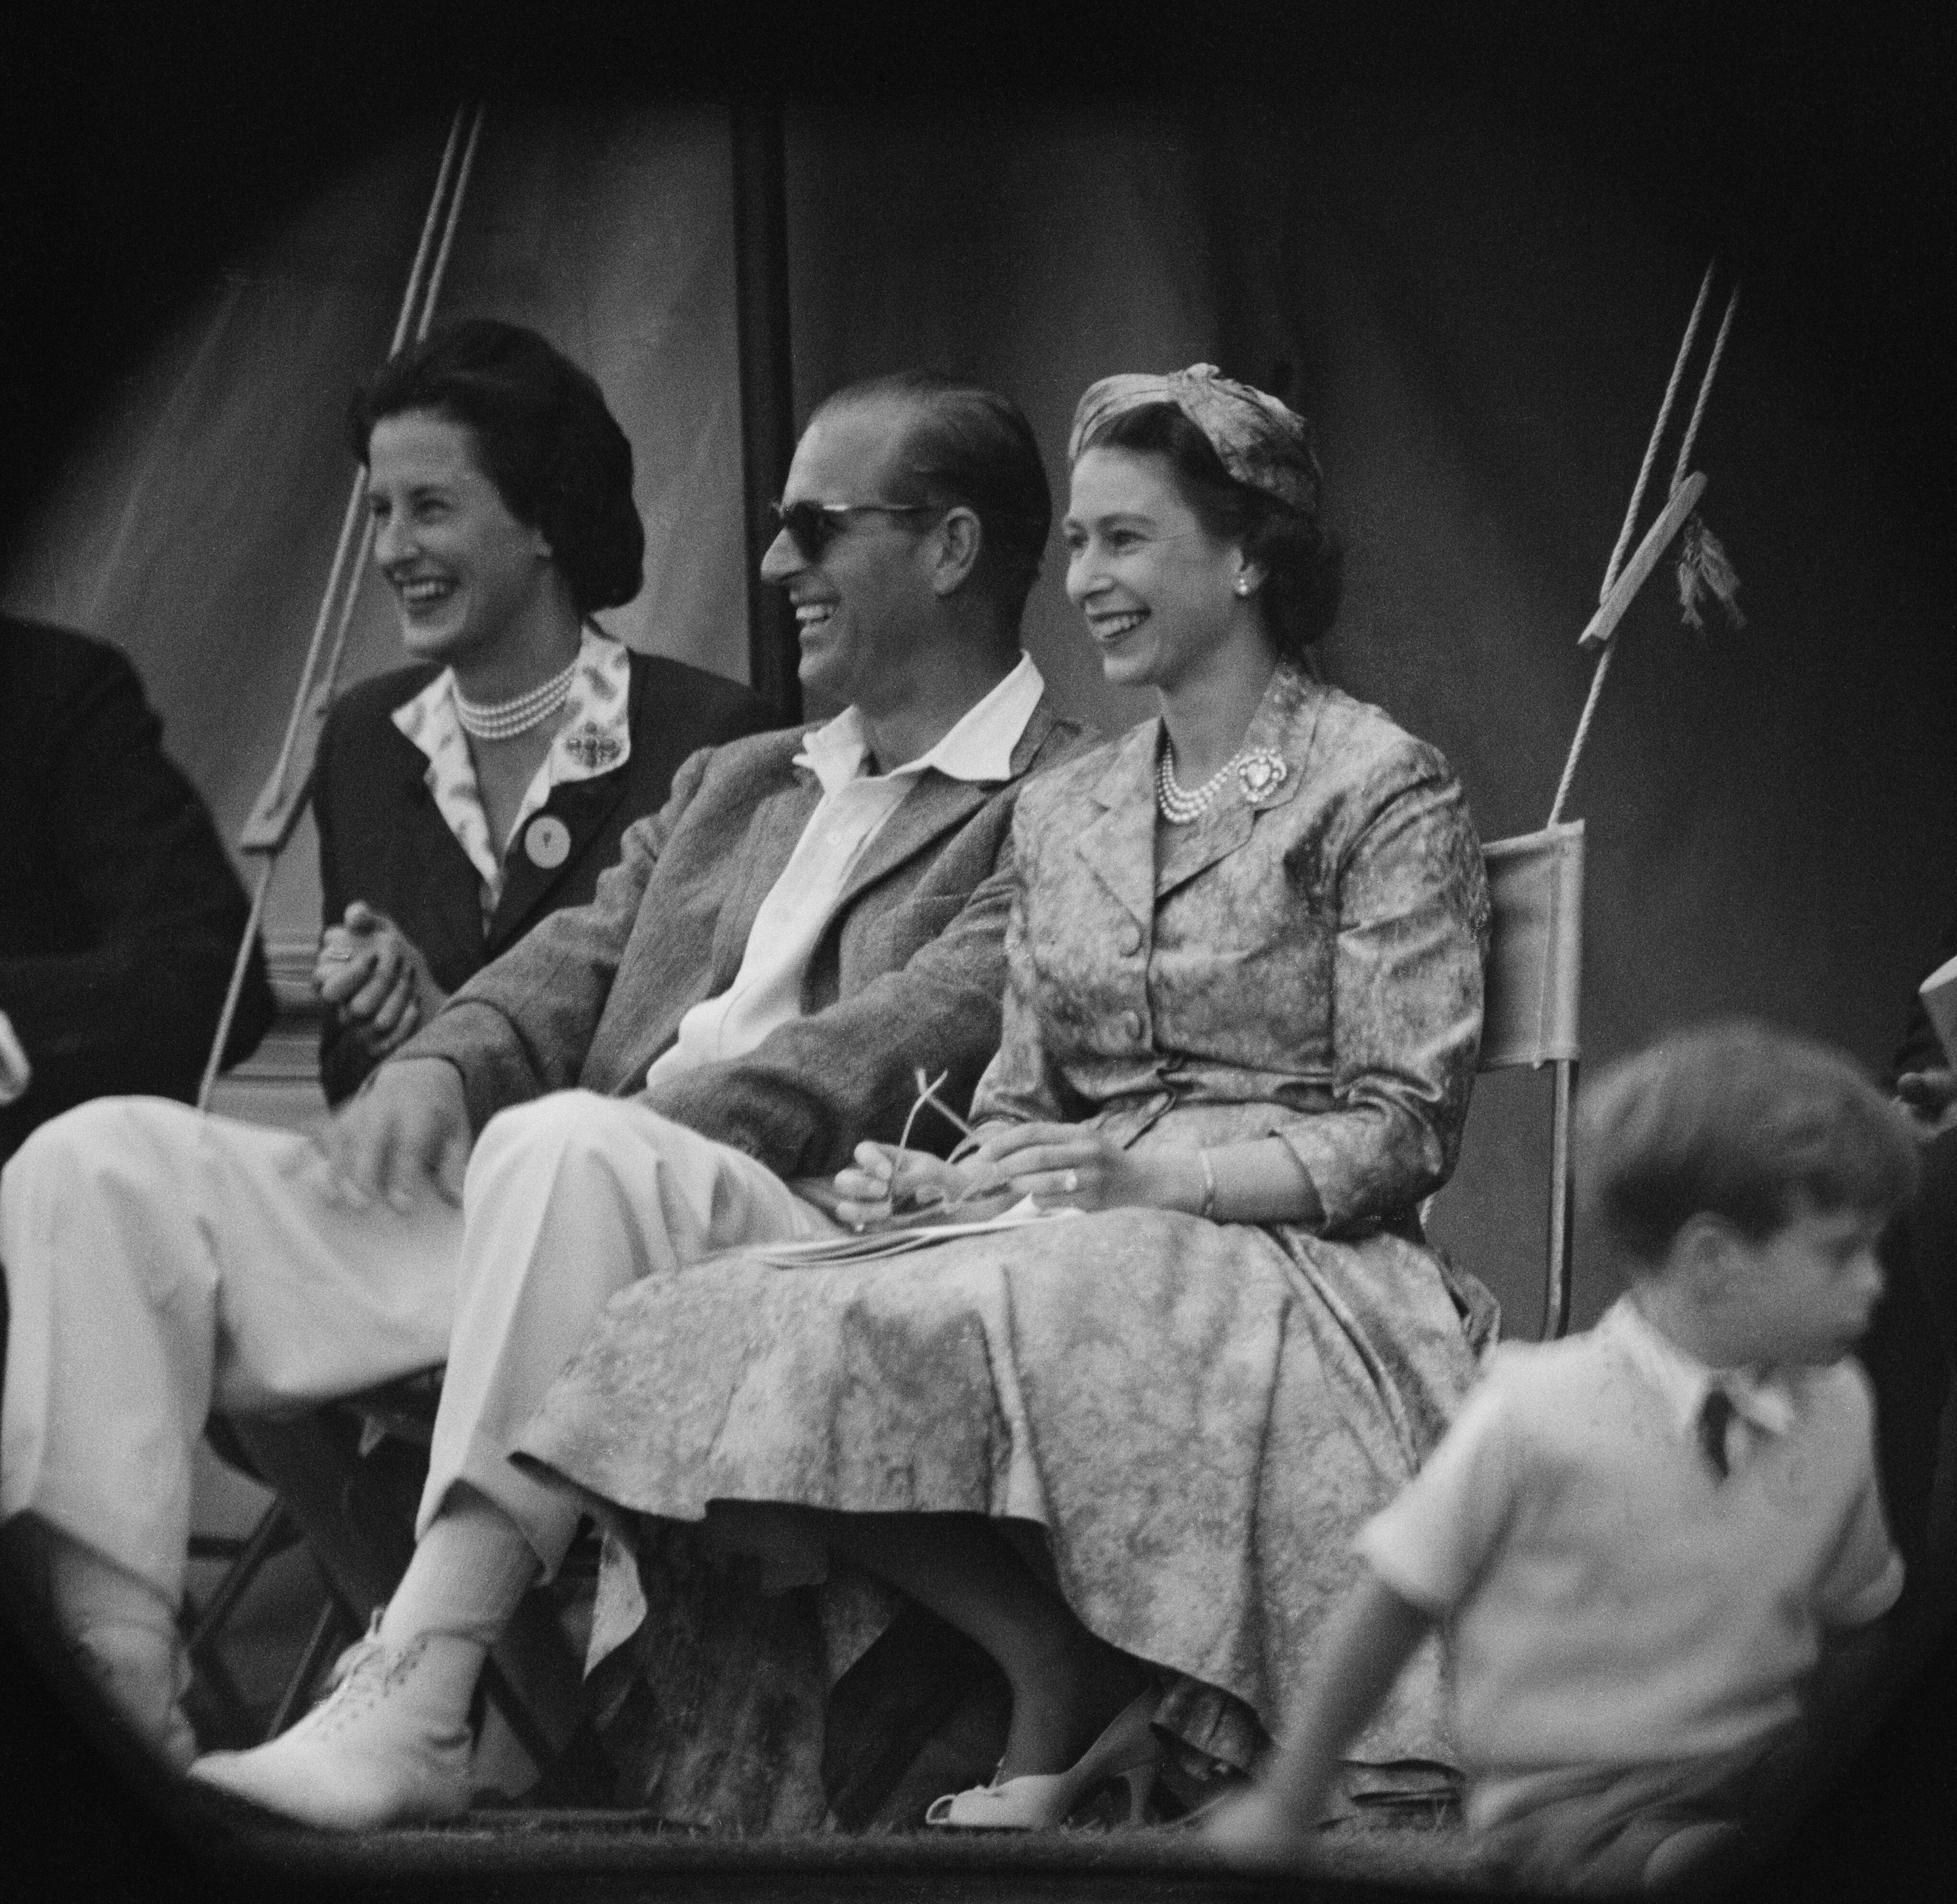 Queen Elizabeth II and Prince Philip, Duke of Edinburgh watch a cricket match. | Source: Getty Images